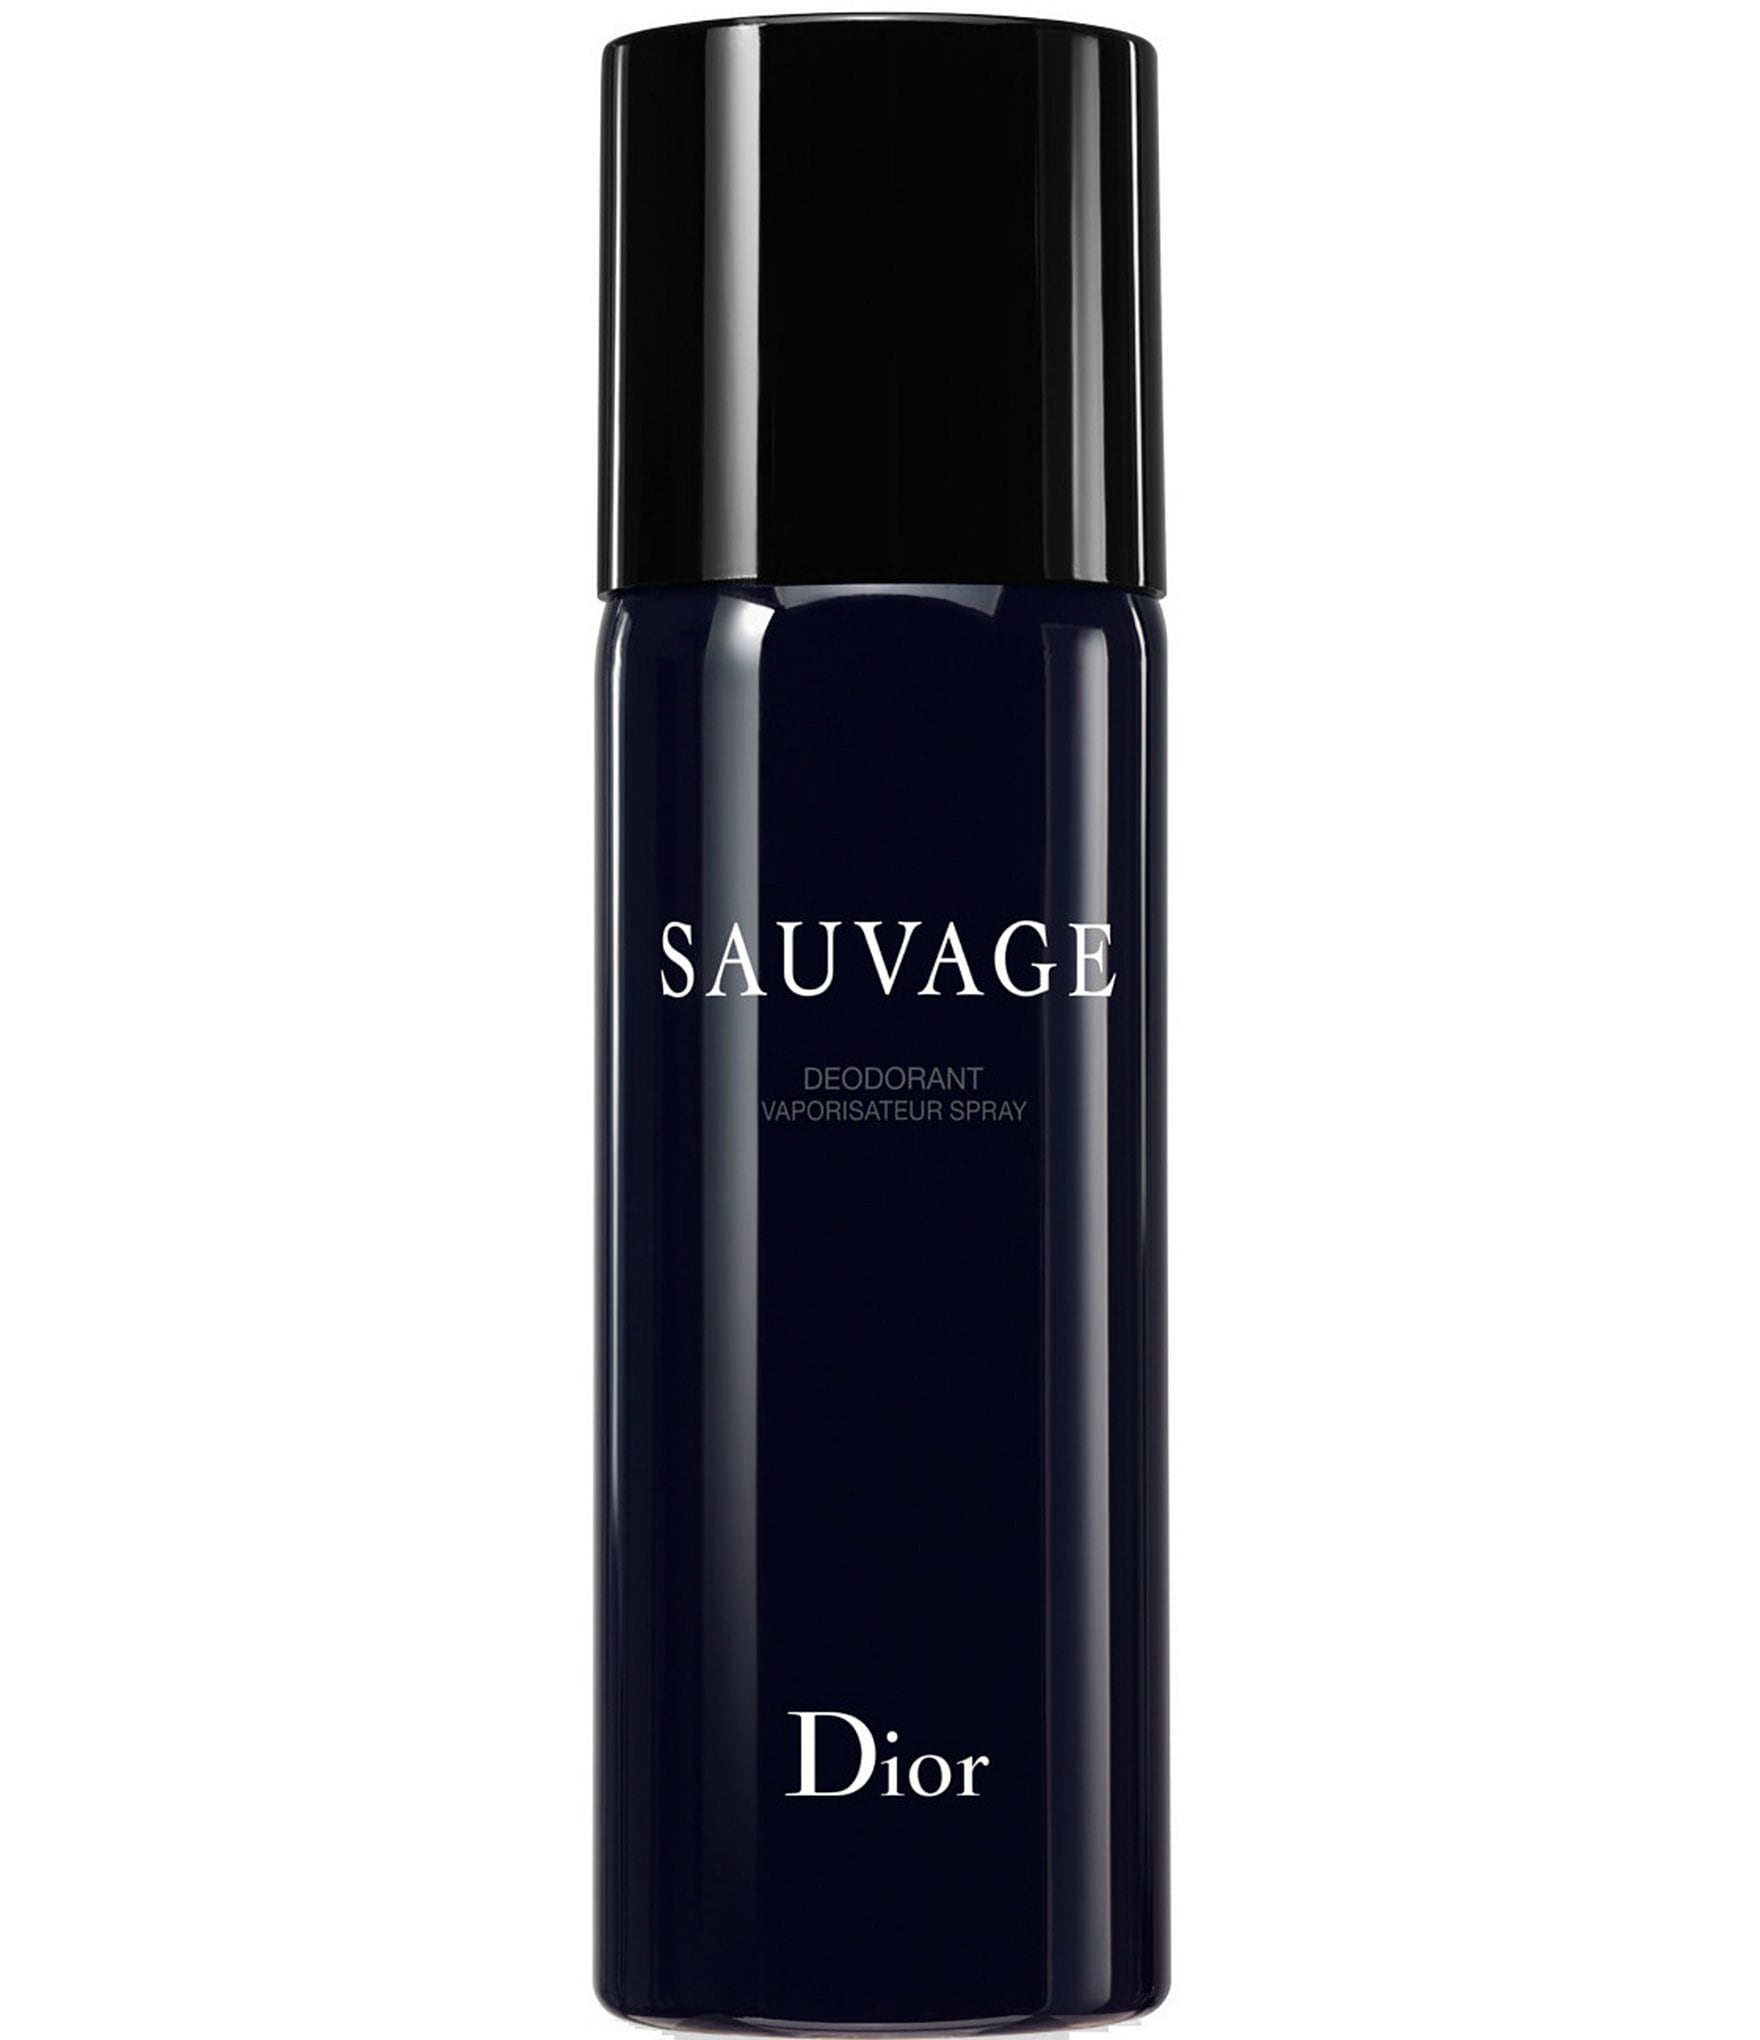 stå klog Spis aftensmad Dior Sauvage Deodorant Body Spray | Dillard's